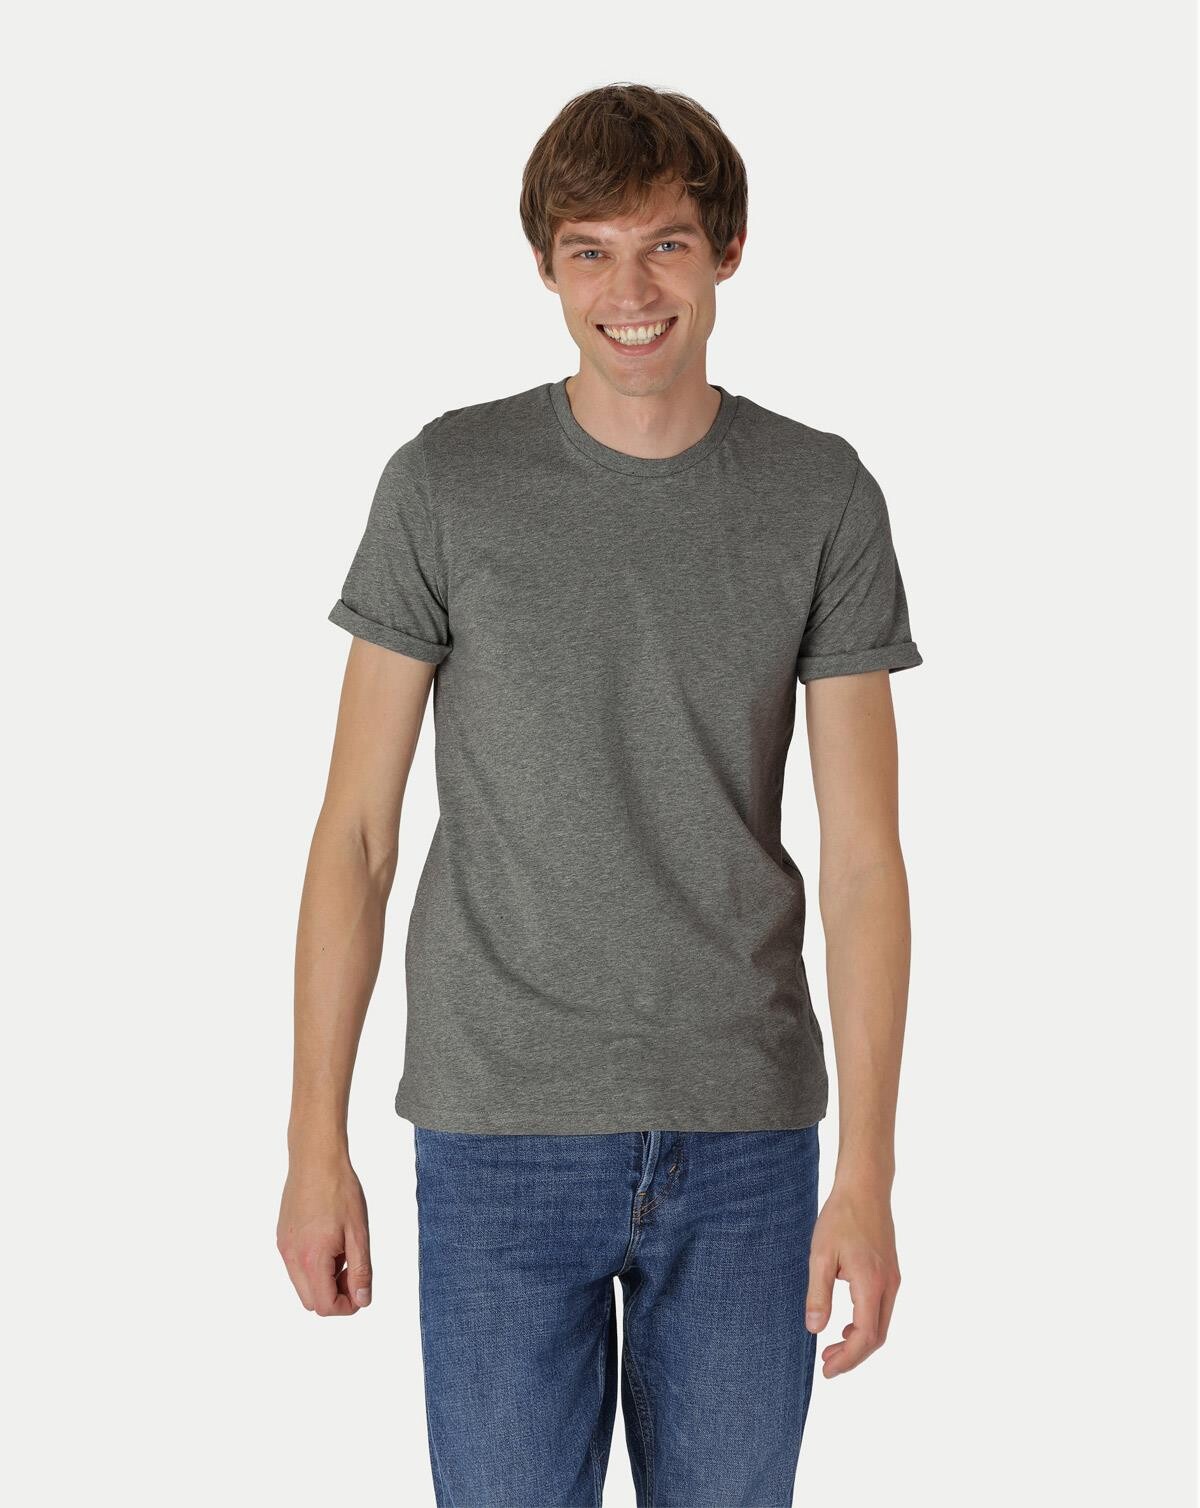 Neutral Organic - Mens Roll Up Sleeve T-shirt (Heather Charcoal, XL)